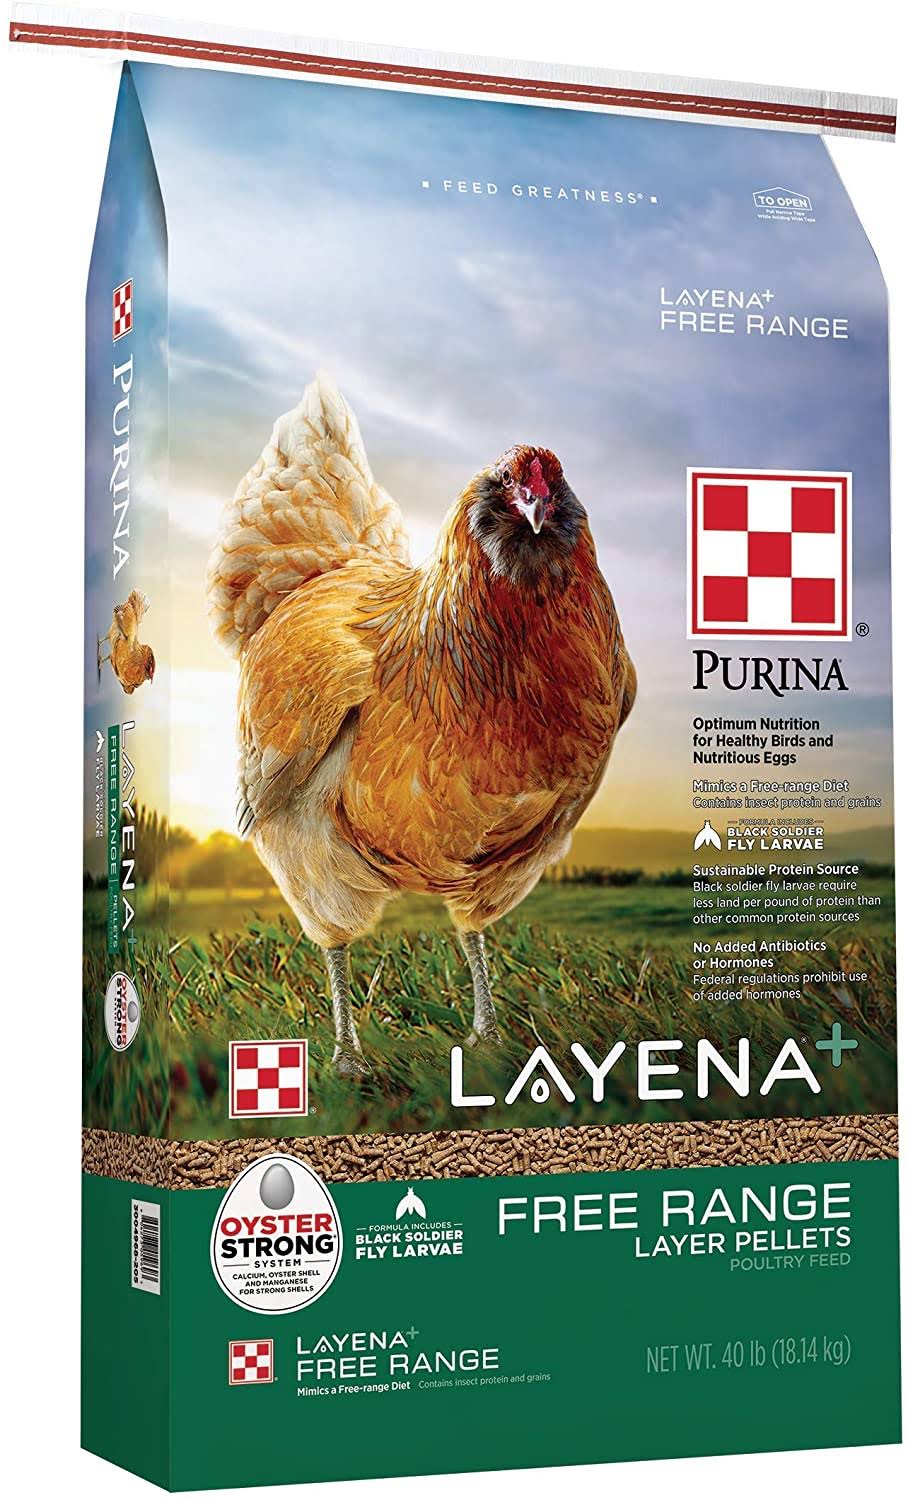 Purina - Layena Free Range Layer Chicken Feed 40 lb